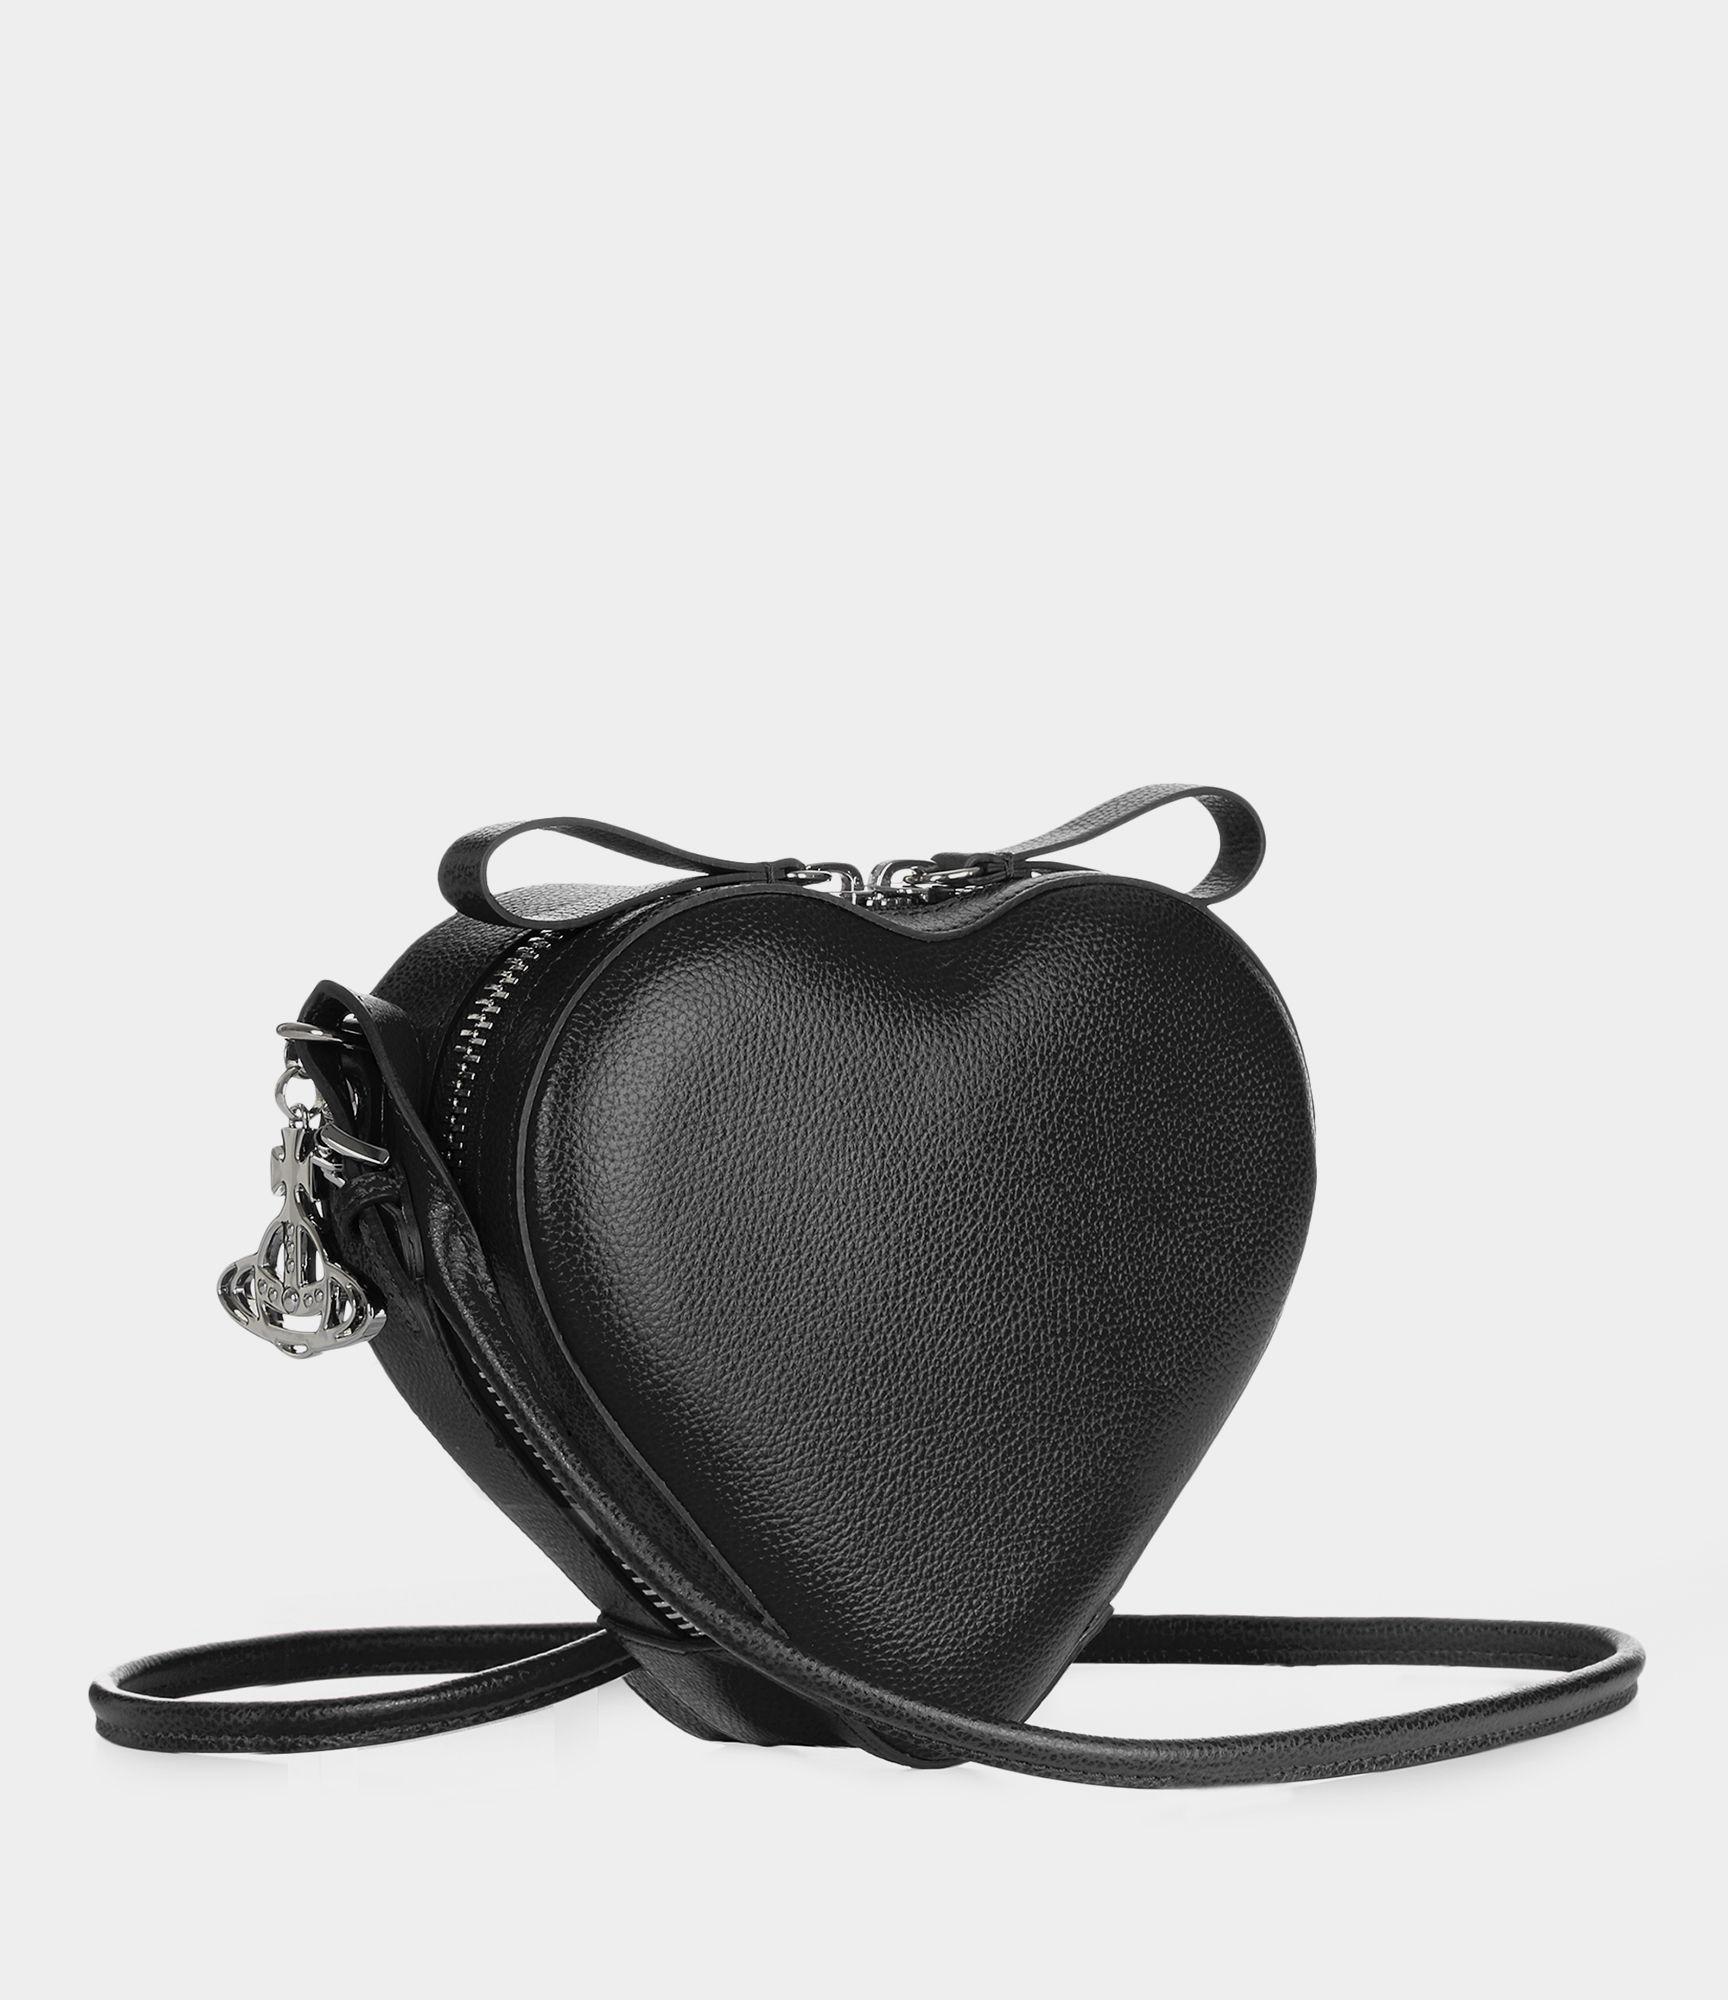 Vivienne Westwood Leather Johanna Heart Crossbody Bag in Black - Lyst